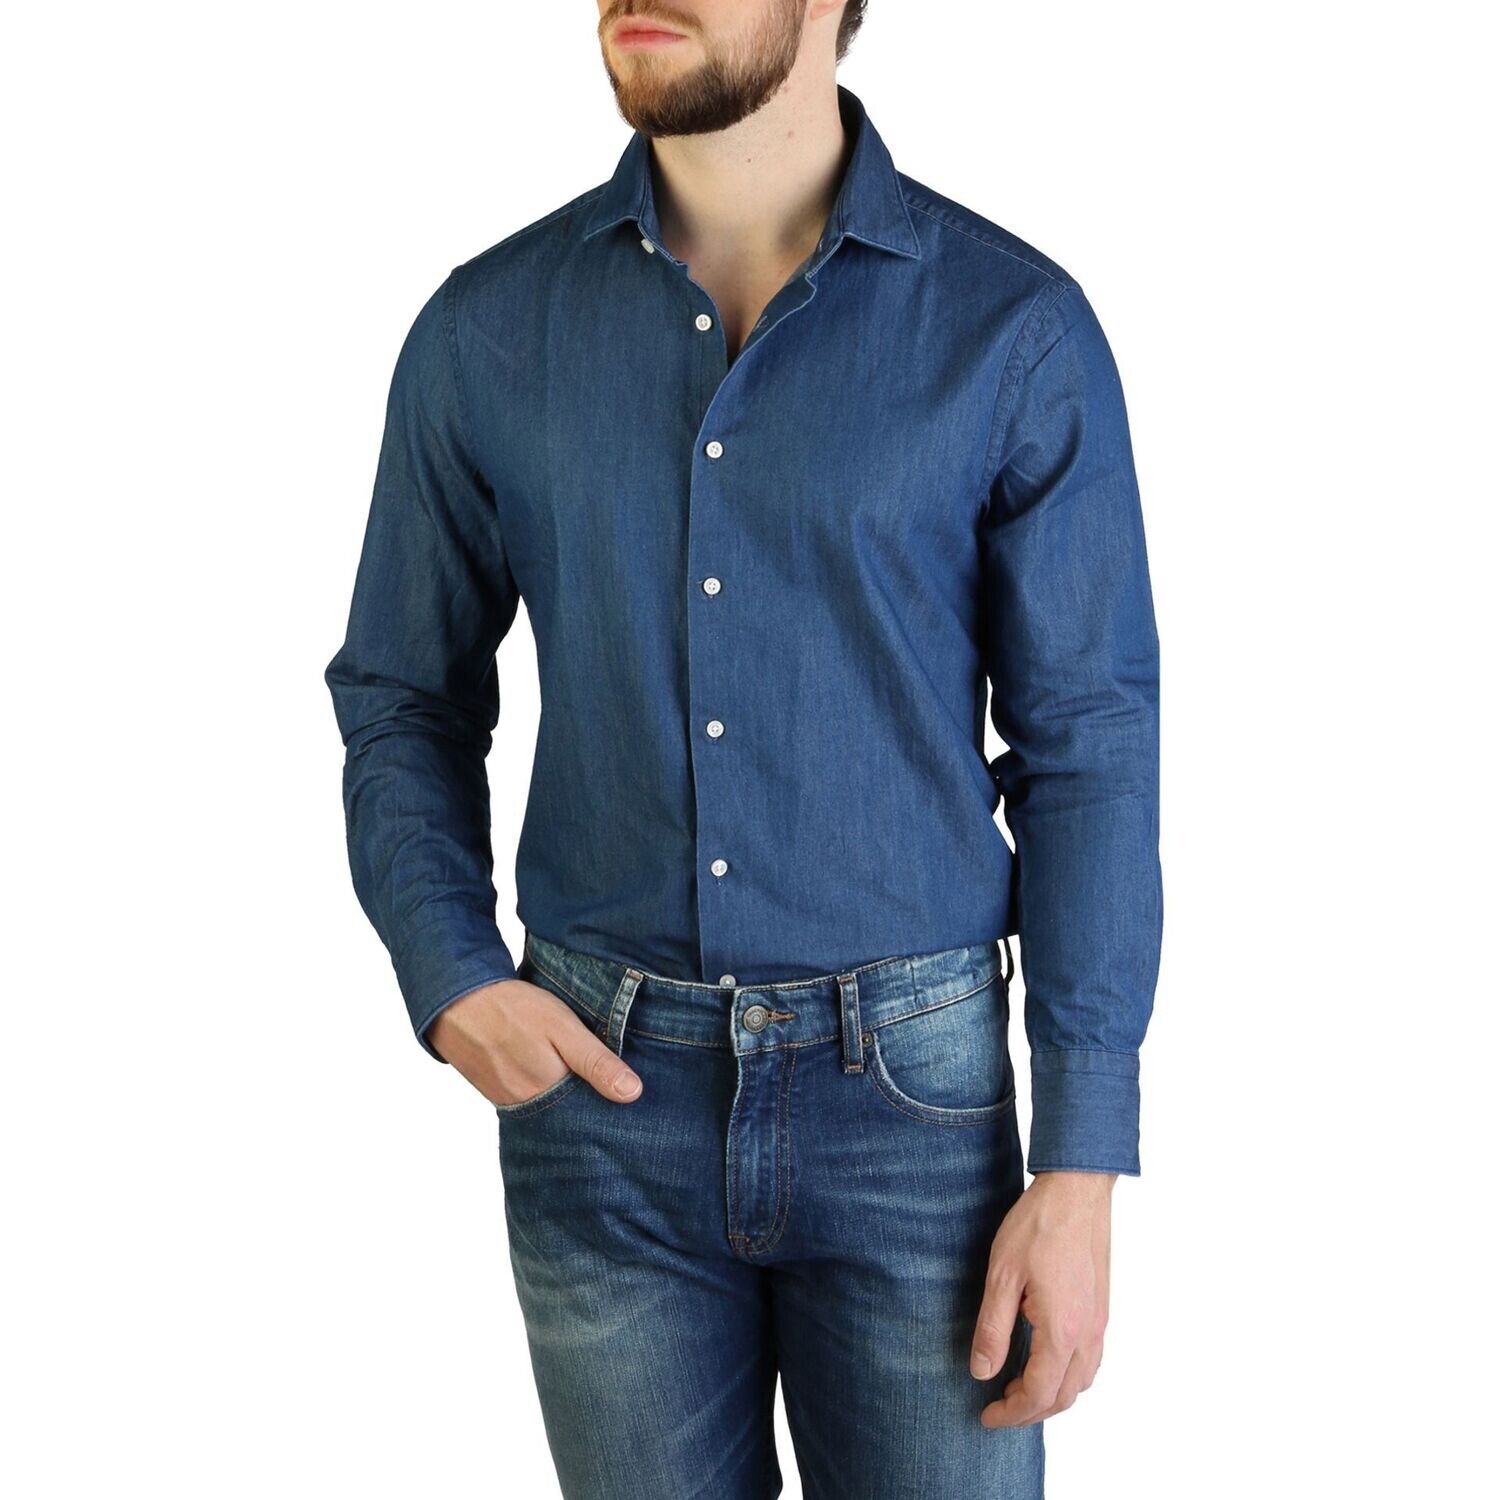 Tommy Hilfiger Blue Shirt, size: 37